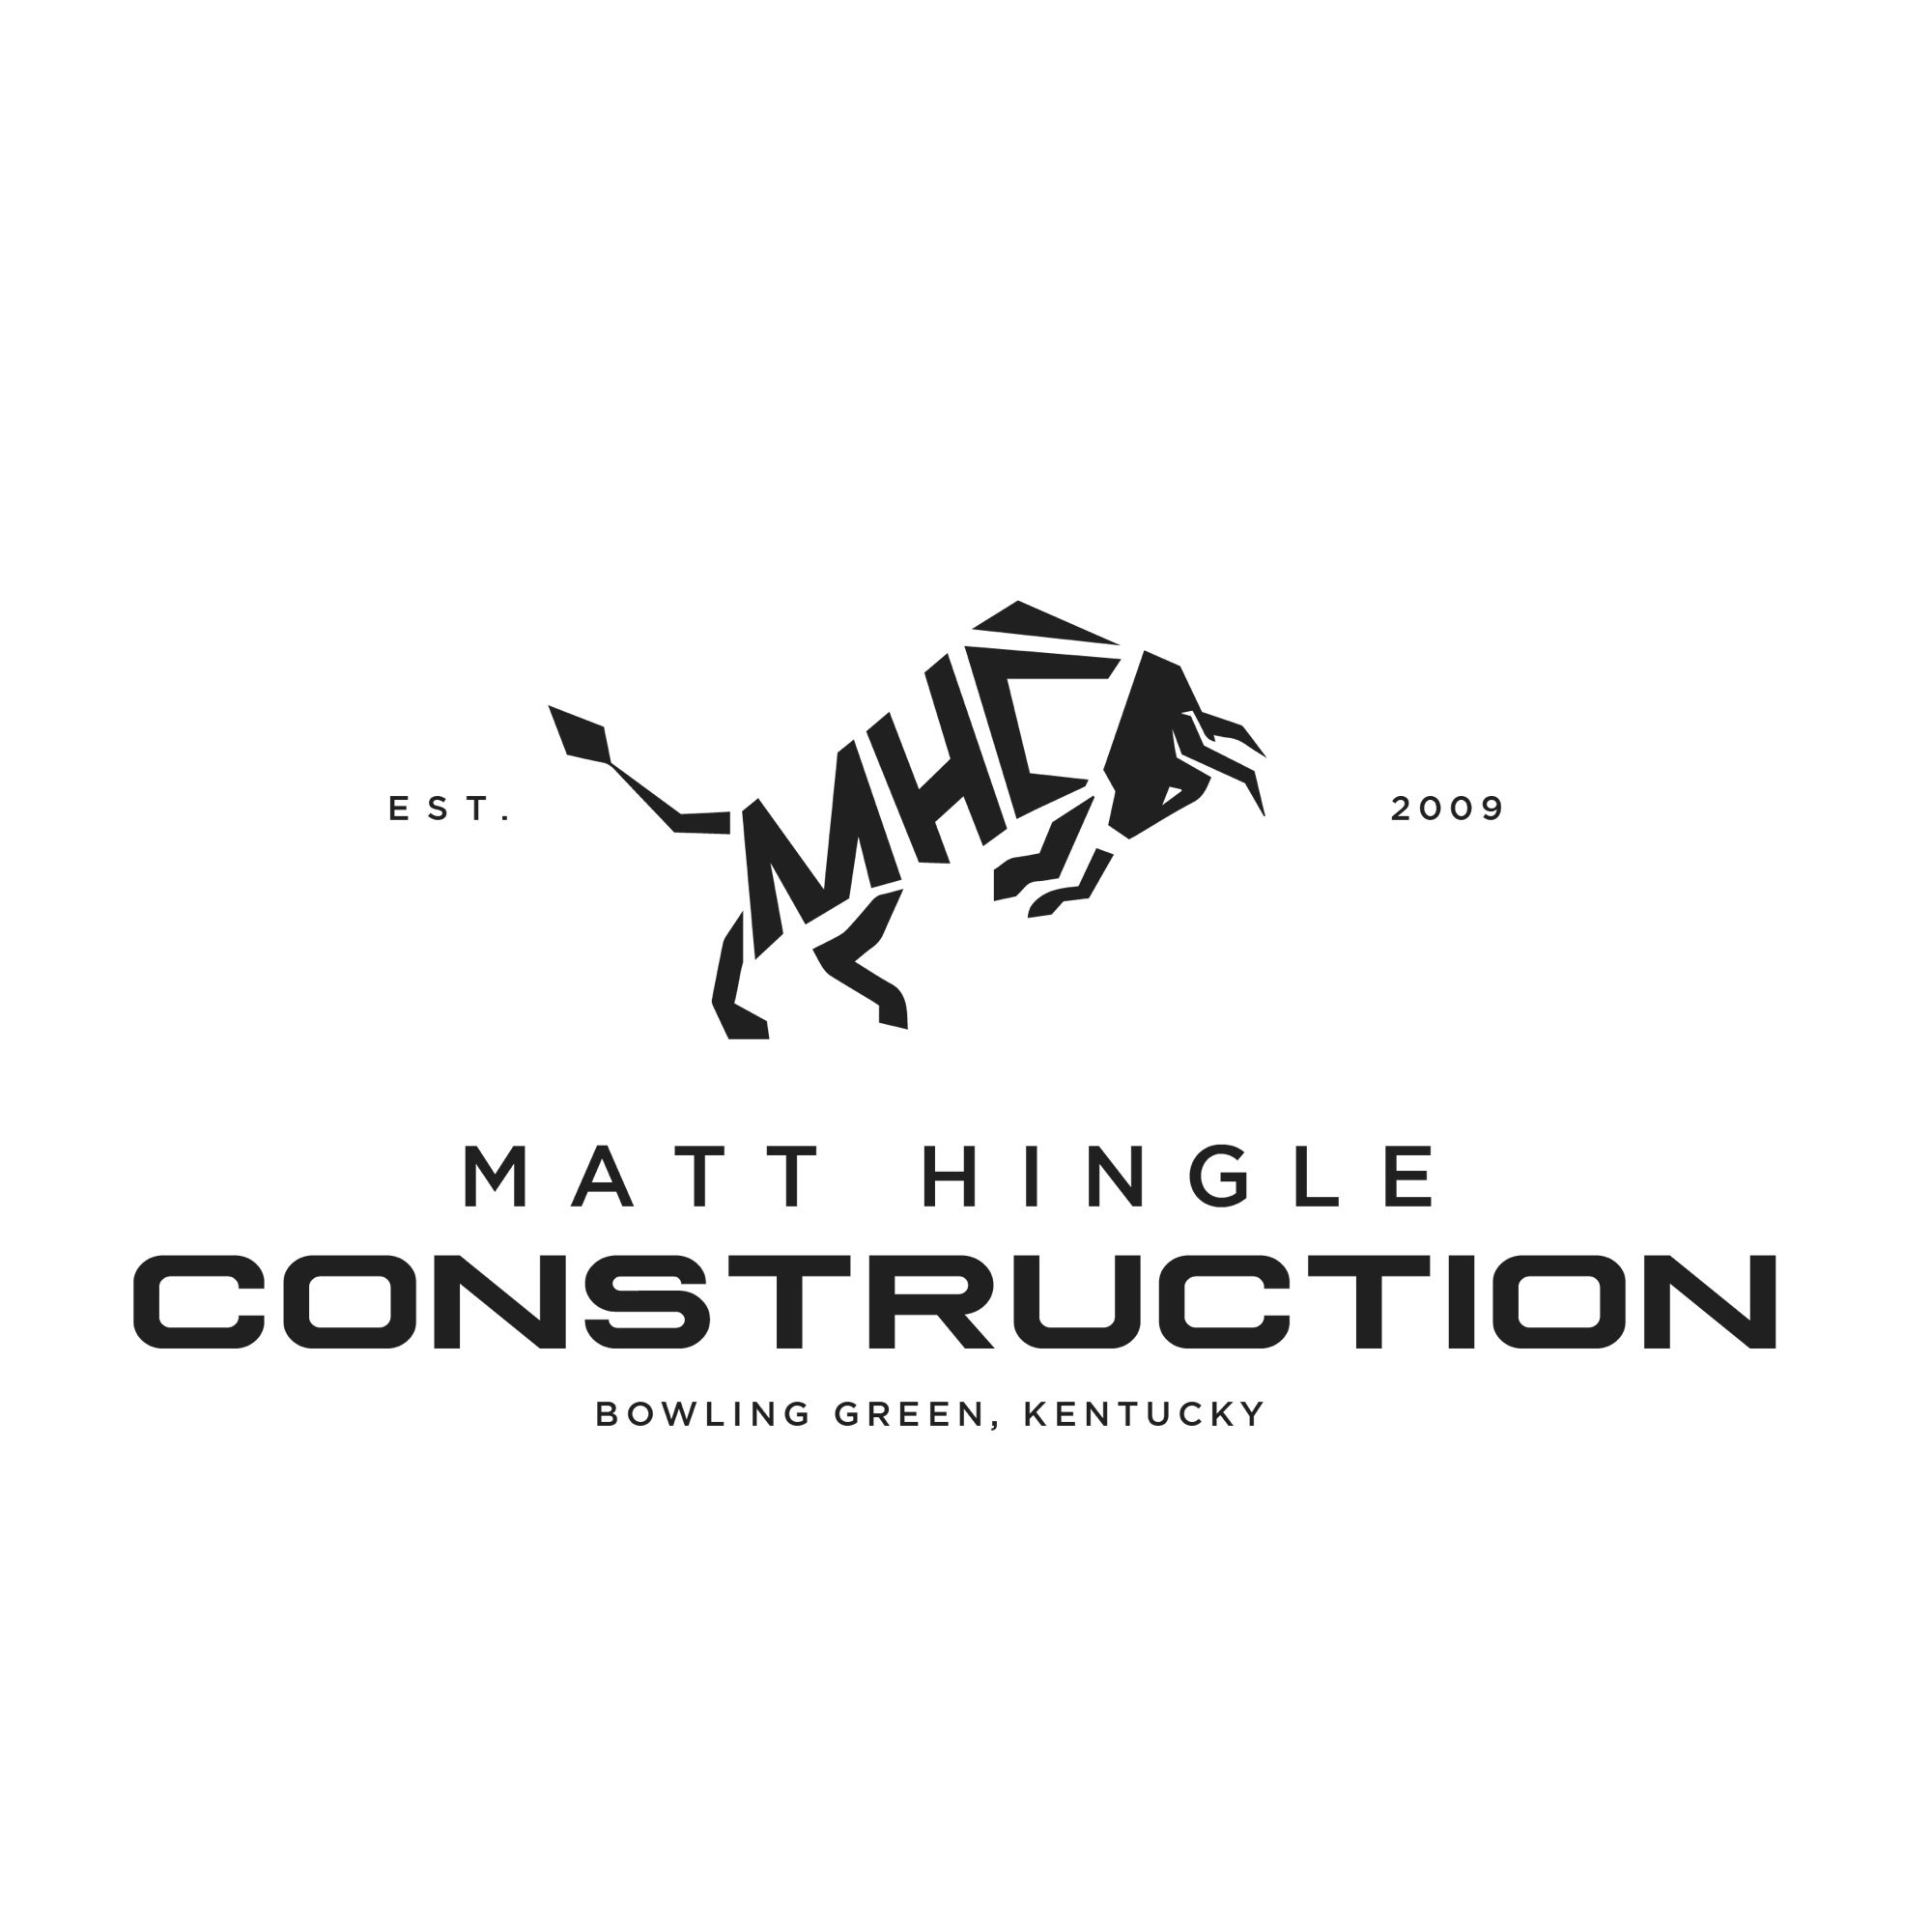 Matt Hingle Construction and Landscaping - Home  Facebook Logo